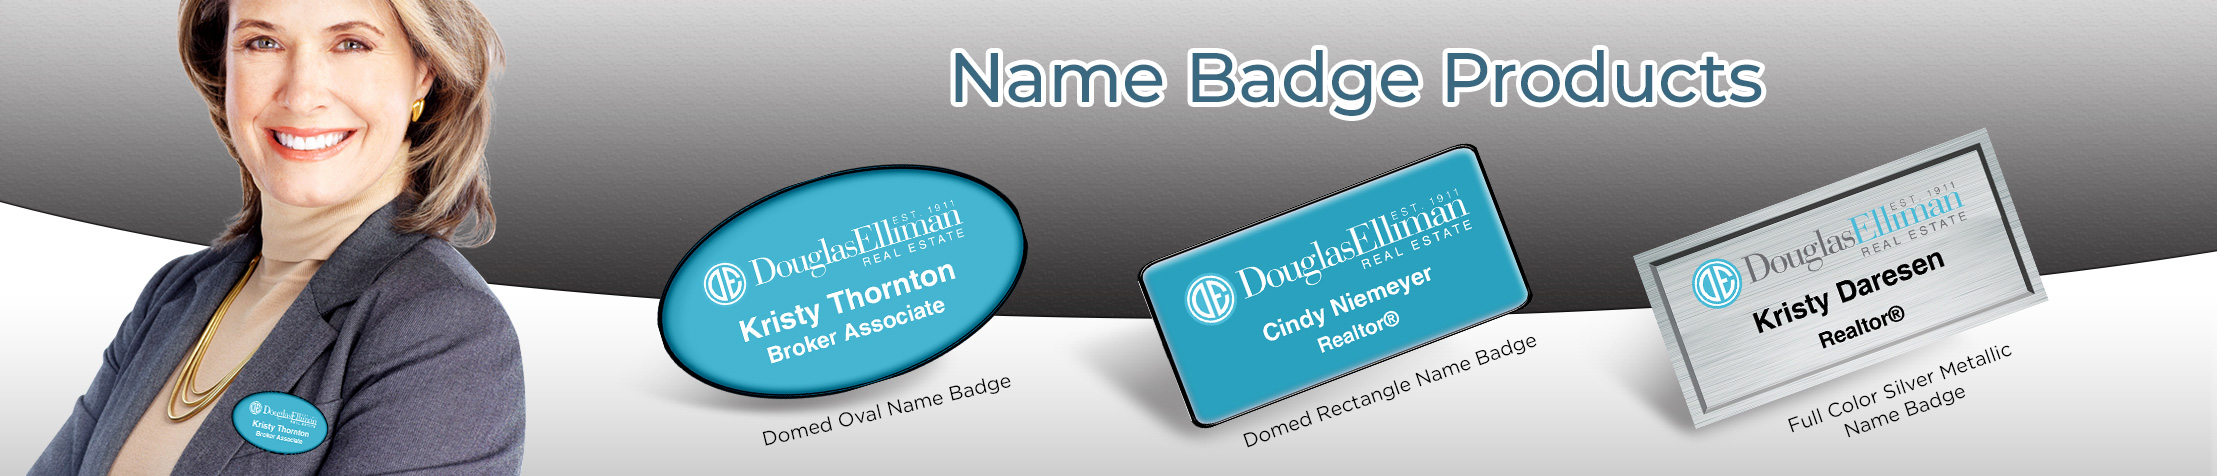 Douglas Elliman Real Estate Name Badge Products - Douglas Elliman Real Estate Name Tags for Realtors | BestPrintBuy.com